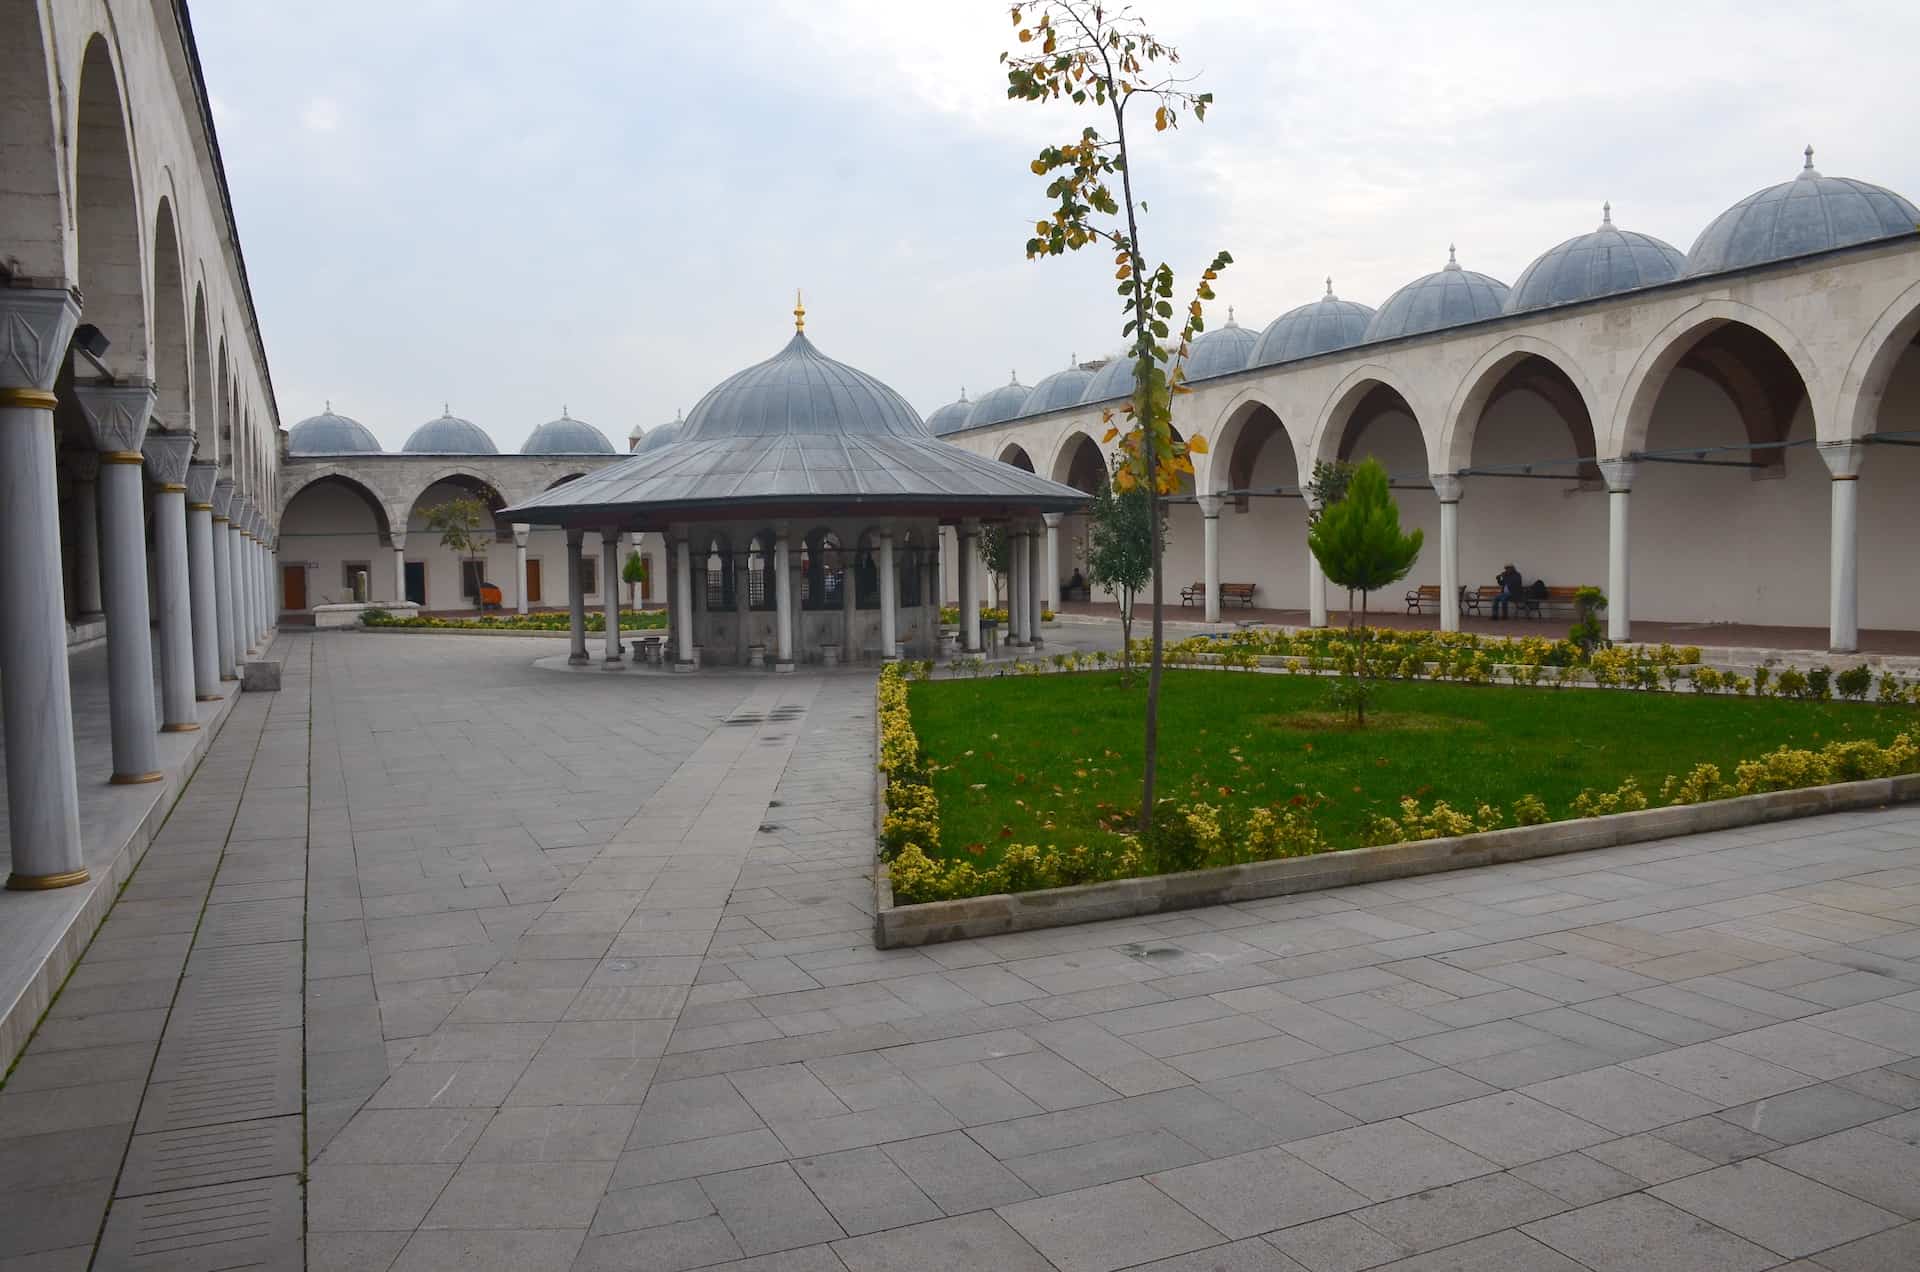 Courtyard at the Mihrimah Sultan Mosque in Edirnekapı, Istanbul, Turkey